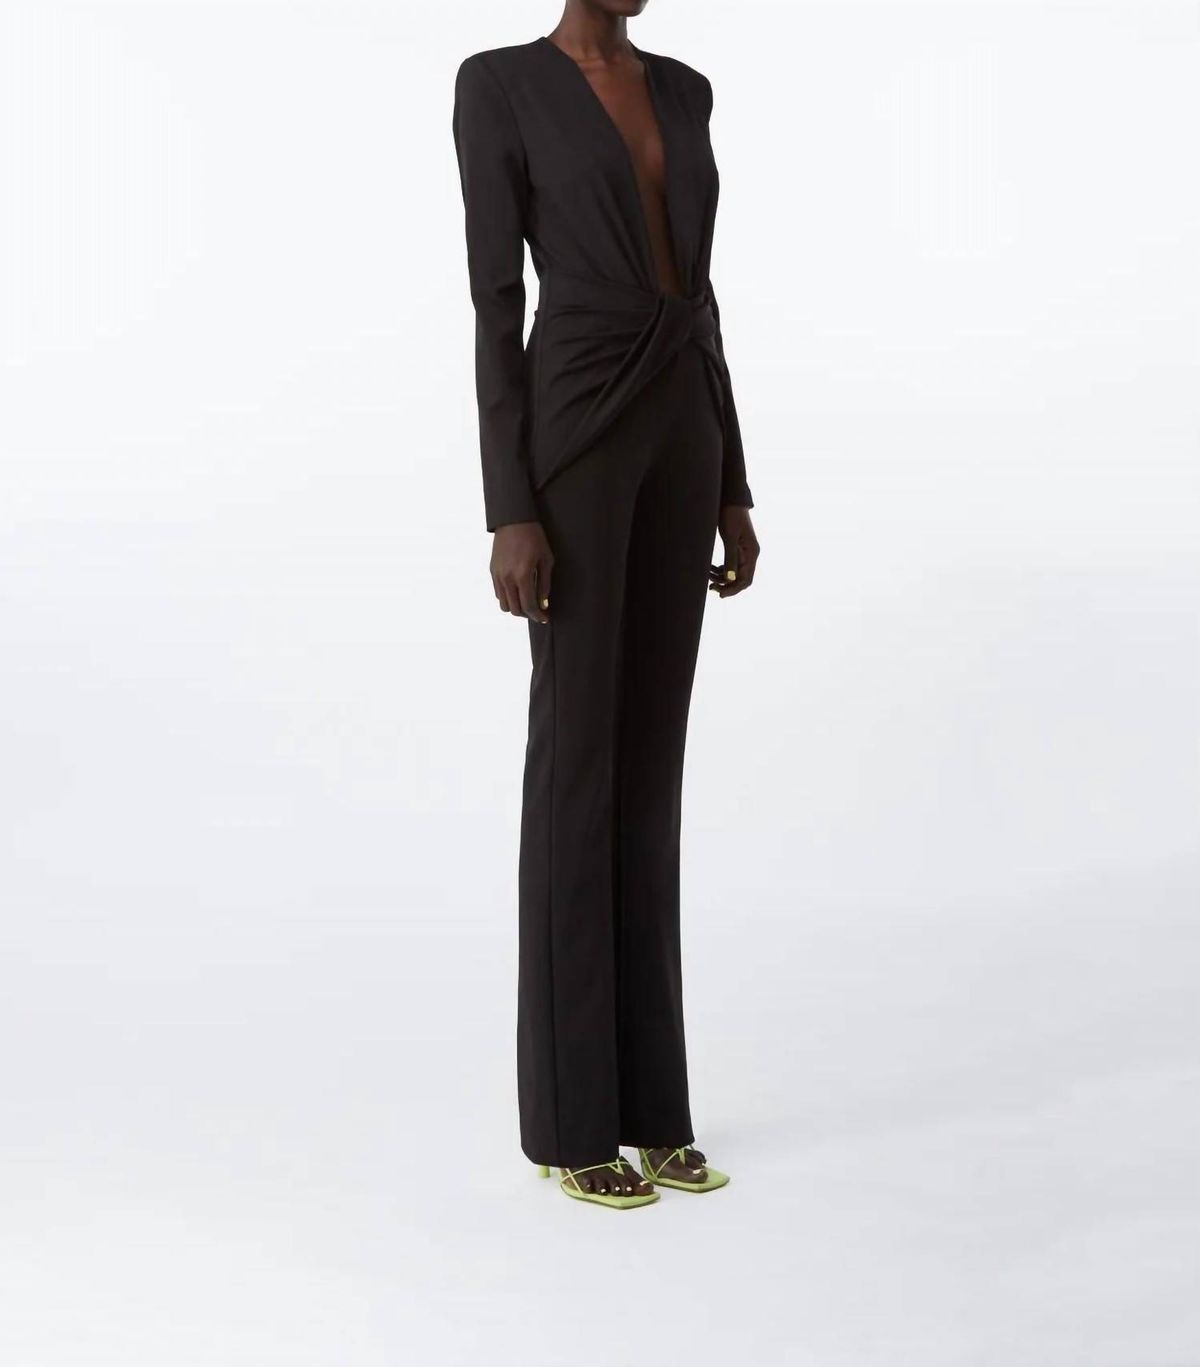 Style 1-3467363907-1502 GAUGE 81 Plus Size 40 Plunge Black Formal Jumpsuit on Queenly